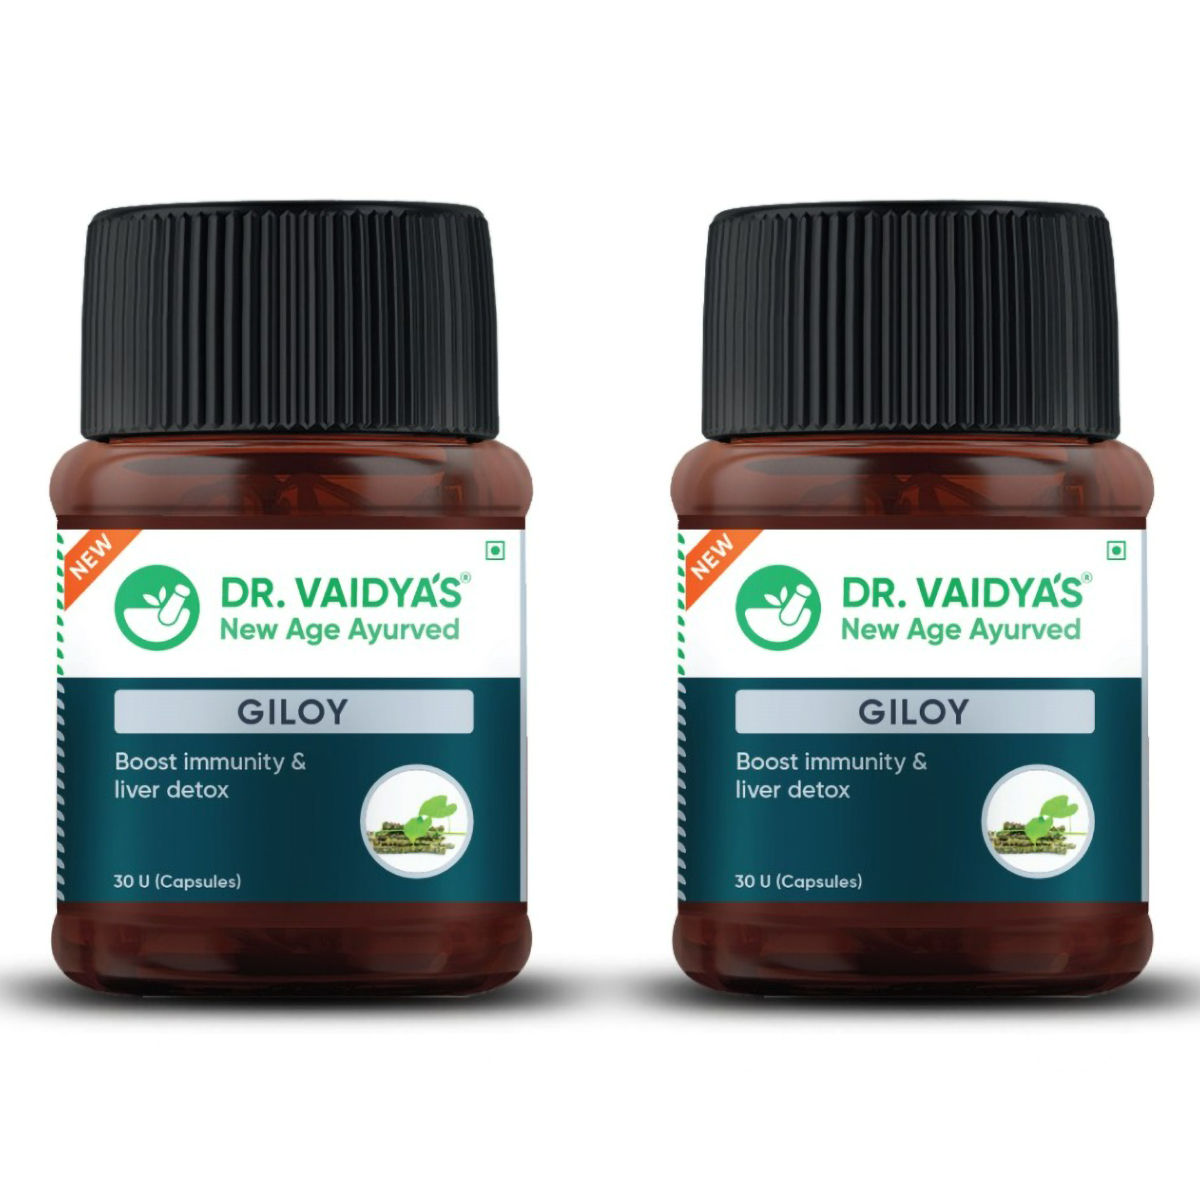 Buy Dr. Vaidya's Giloy Immunity Enhancer, 60 Capsules (2 x 30 Capsules) Online